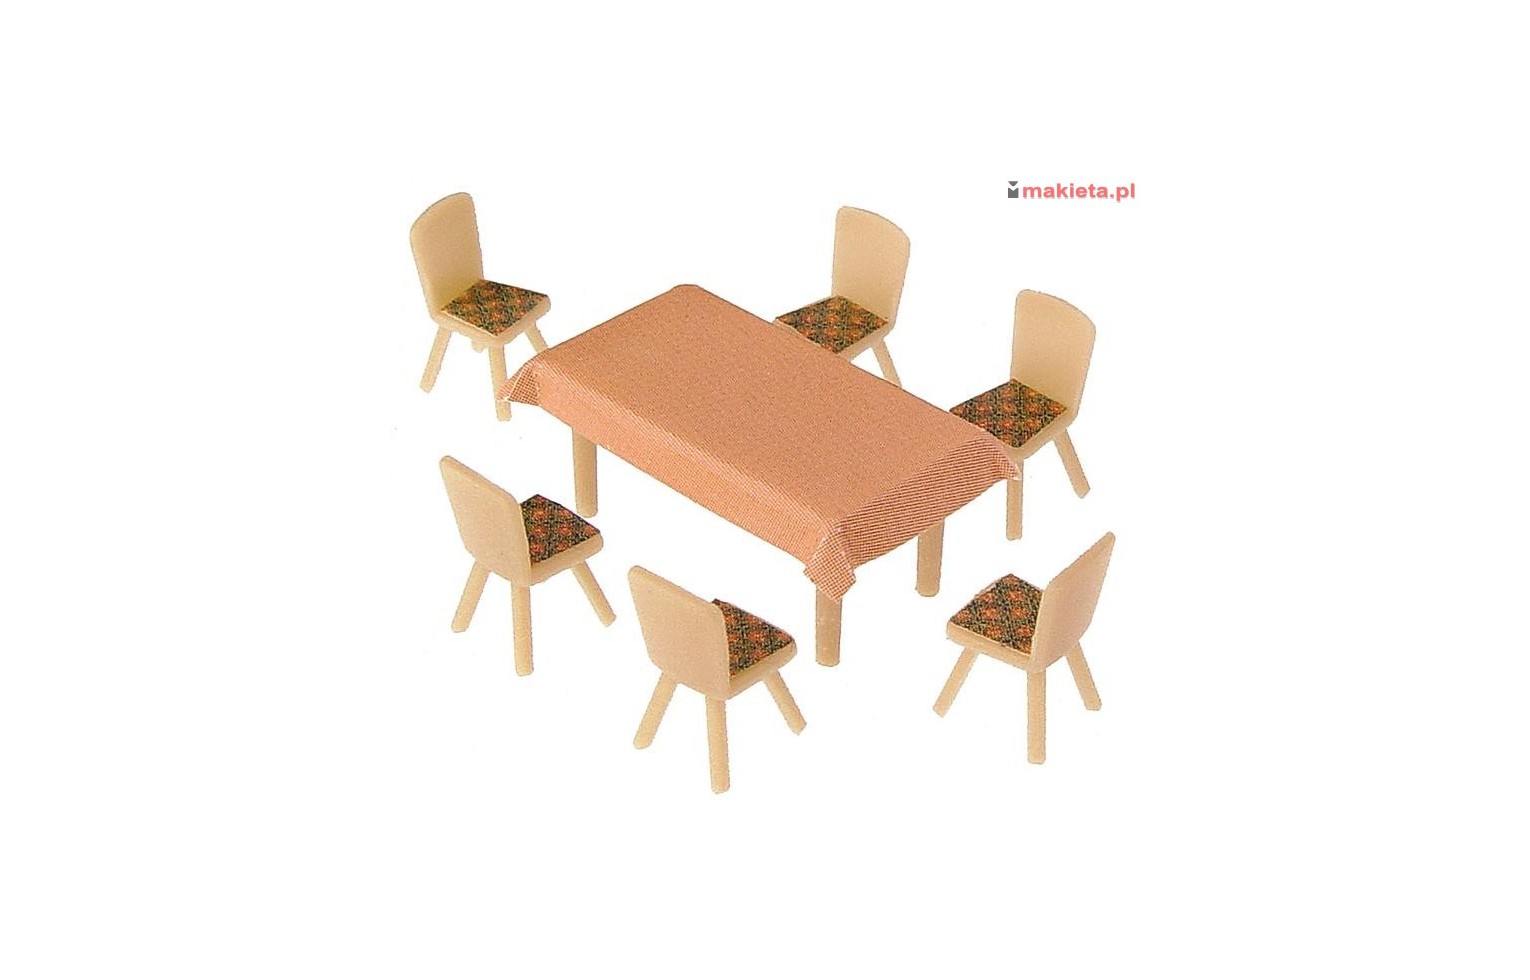 Faller 180442, 4 stoły i 24 krzesła, skala H0